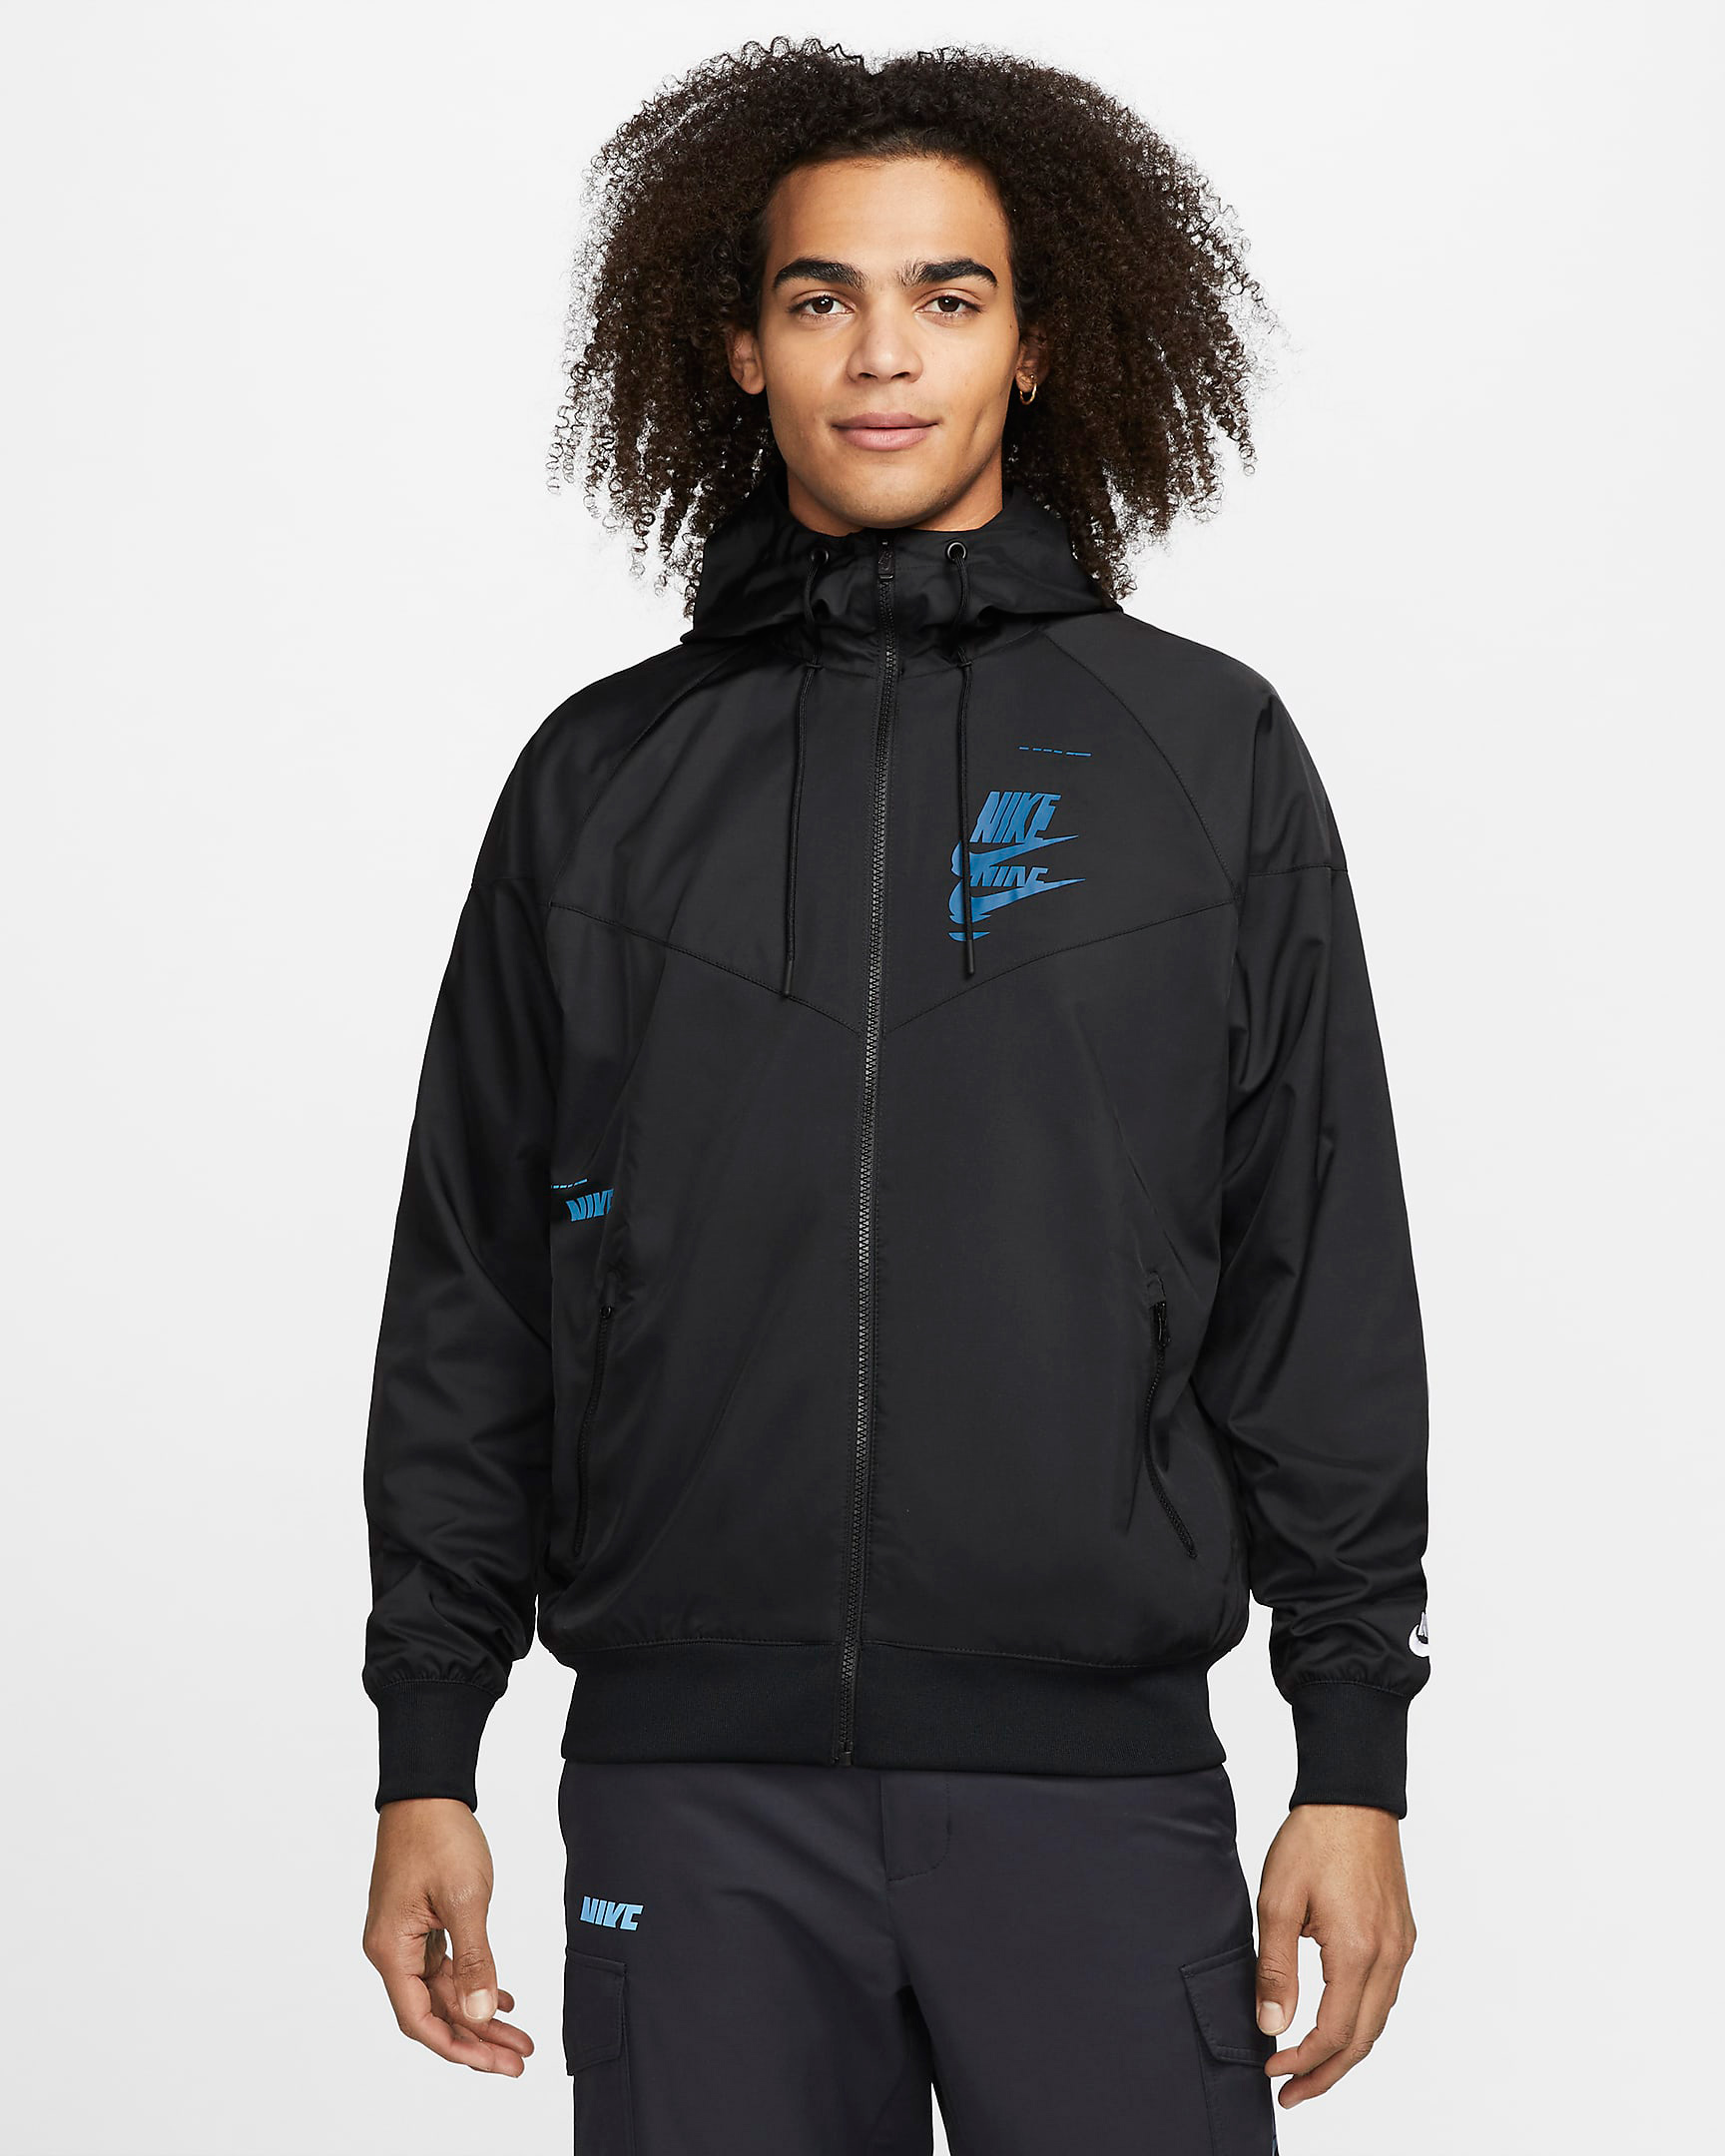 Air Jordan 1 High Dark Marina Blue Nike Jacket Outfit